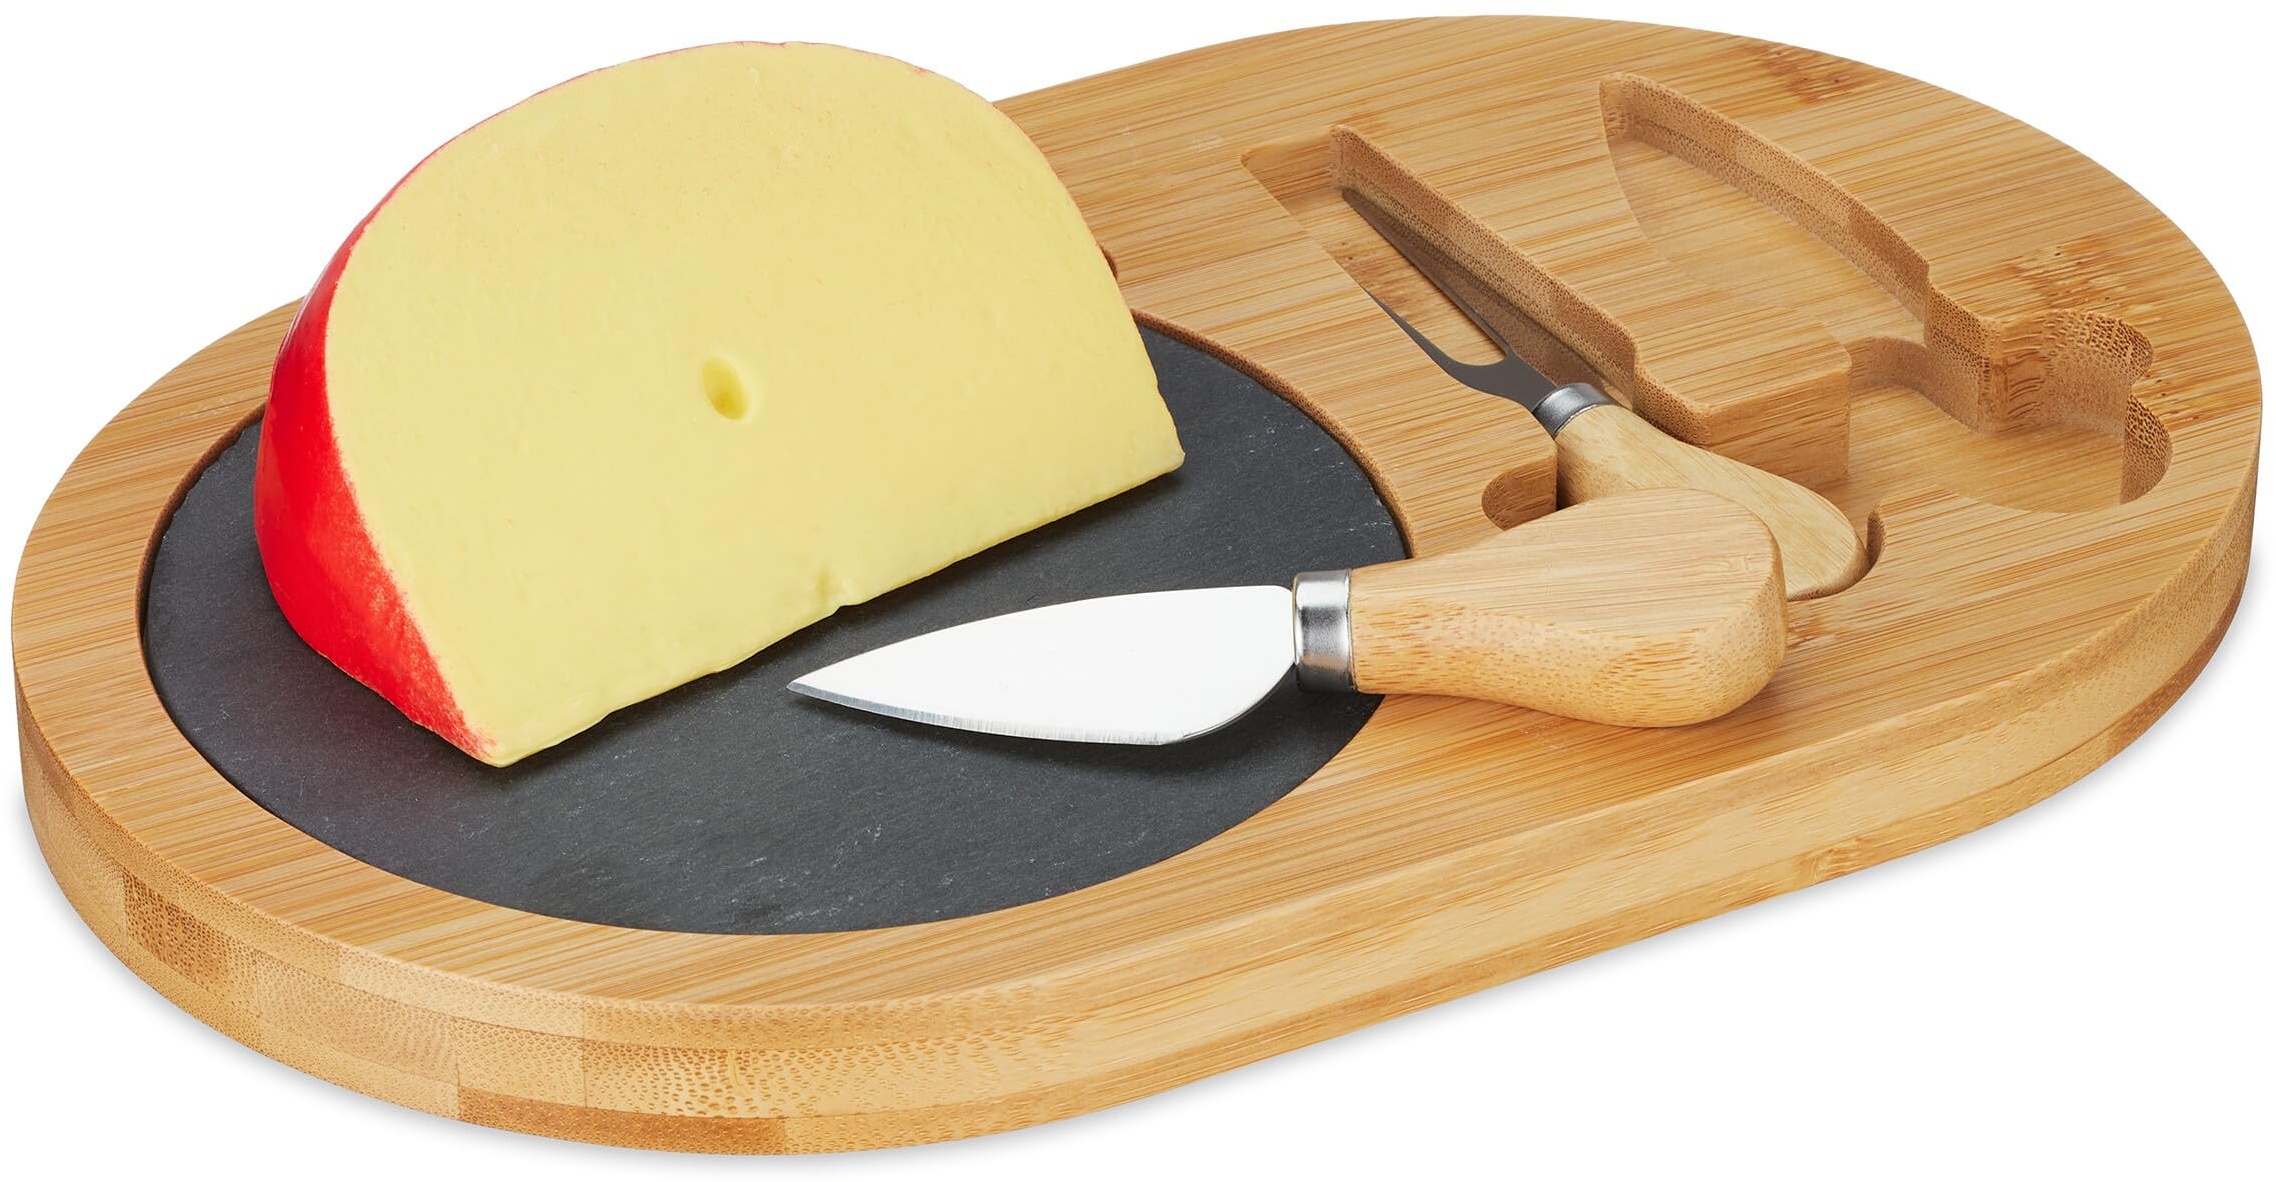 Relaxdays Käsebrett mit Käsemesser Set, Bambus Käseplatte mit Schiefer & Käsebesteck, B x T: 28 x 18 cm, Natur/schwarz